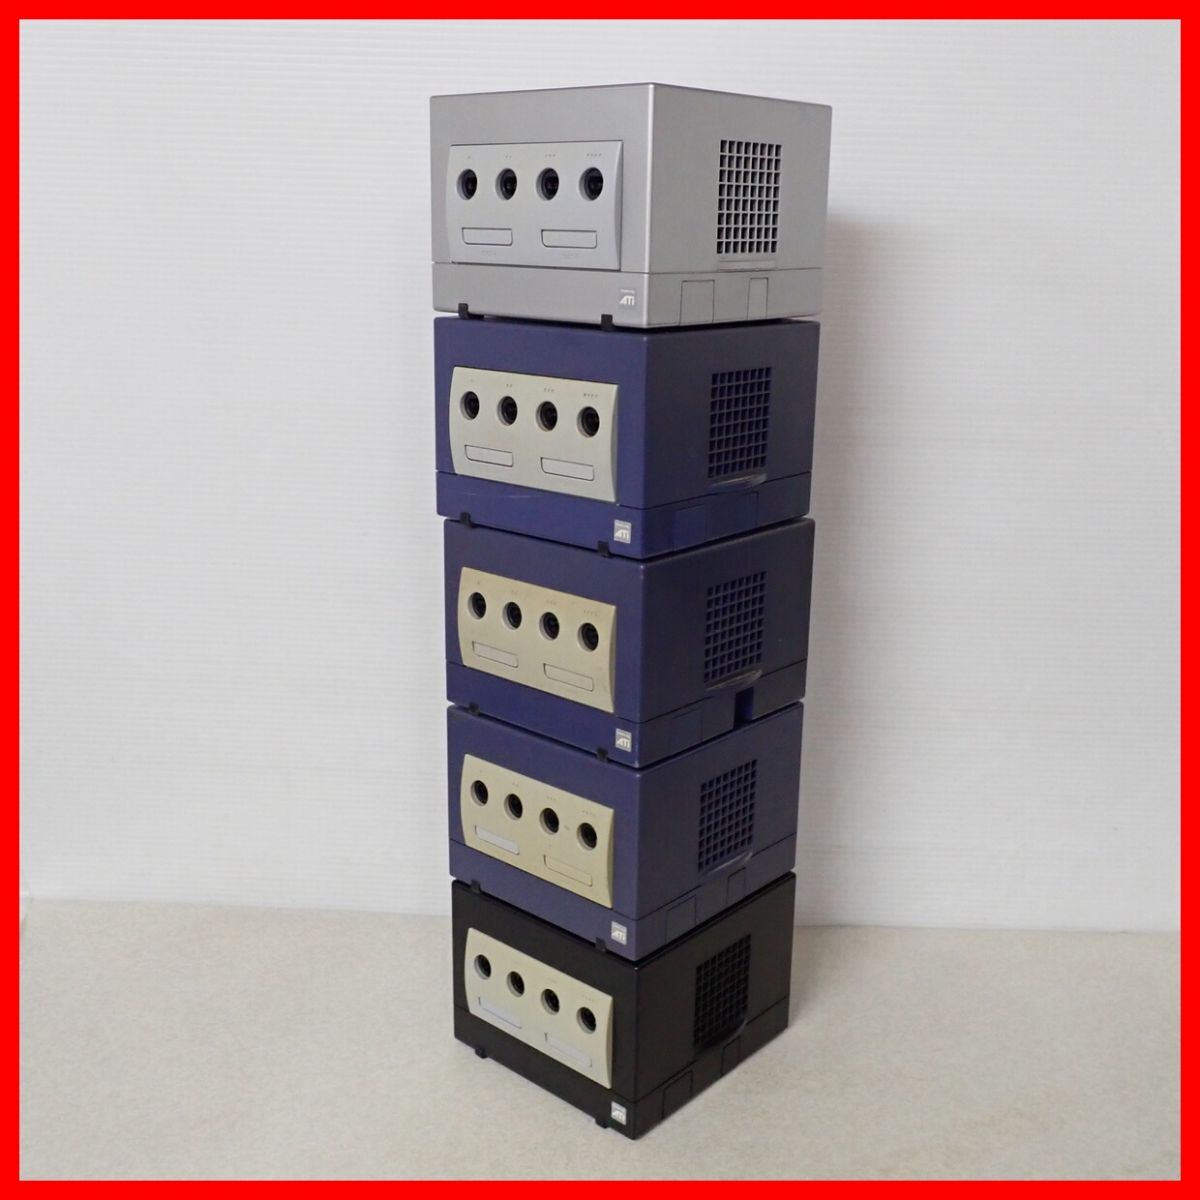 GC Game Cube body orange / violet / black / silver 10 pcs together large amount set Nintendo nintendo Junk [40